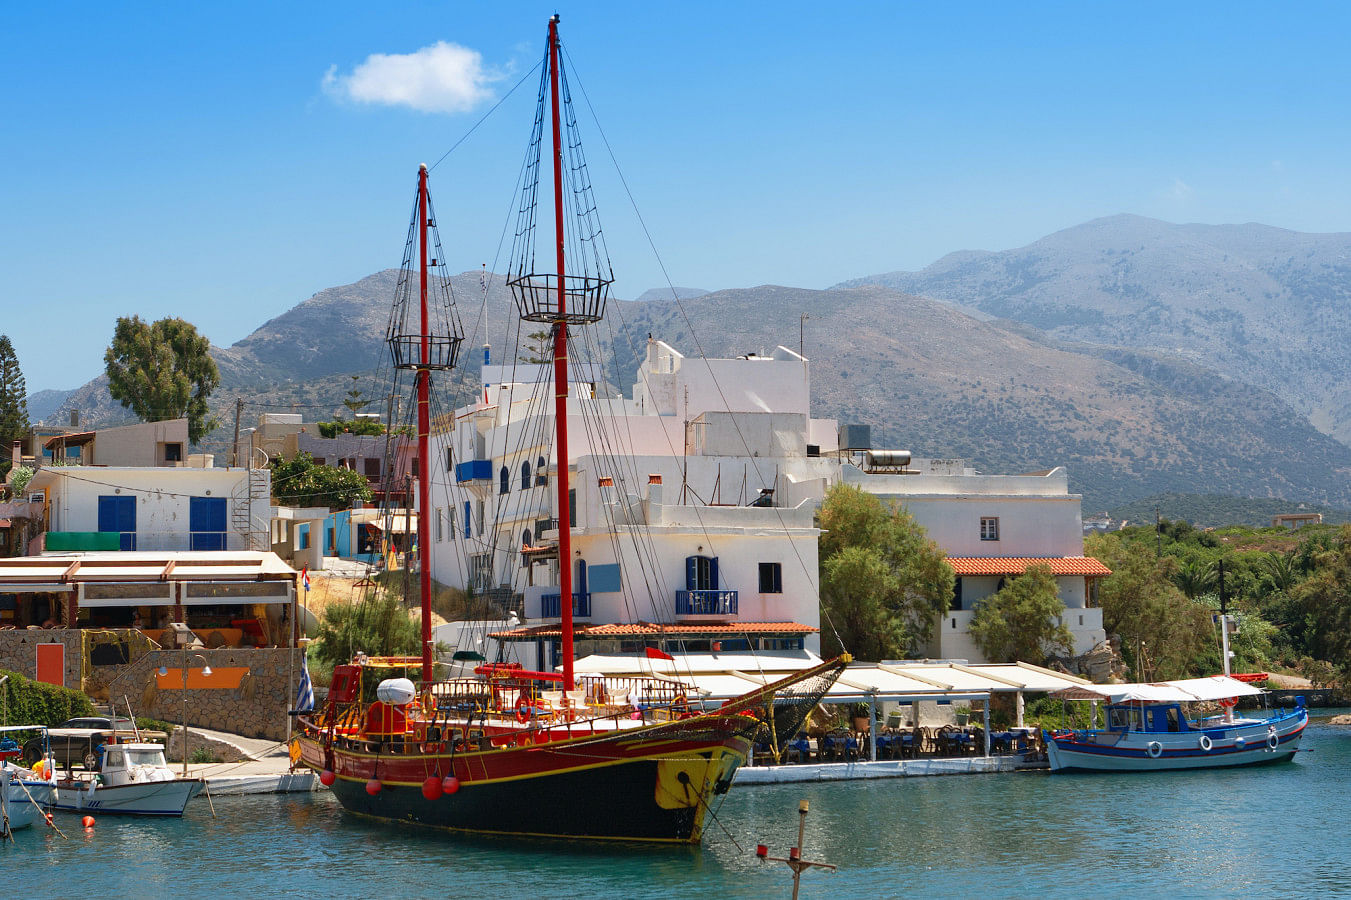 Lej en båd i Kreta